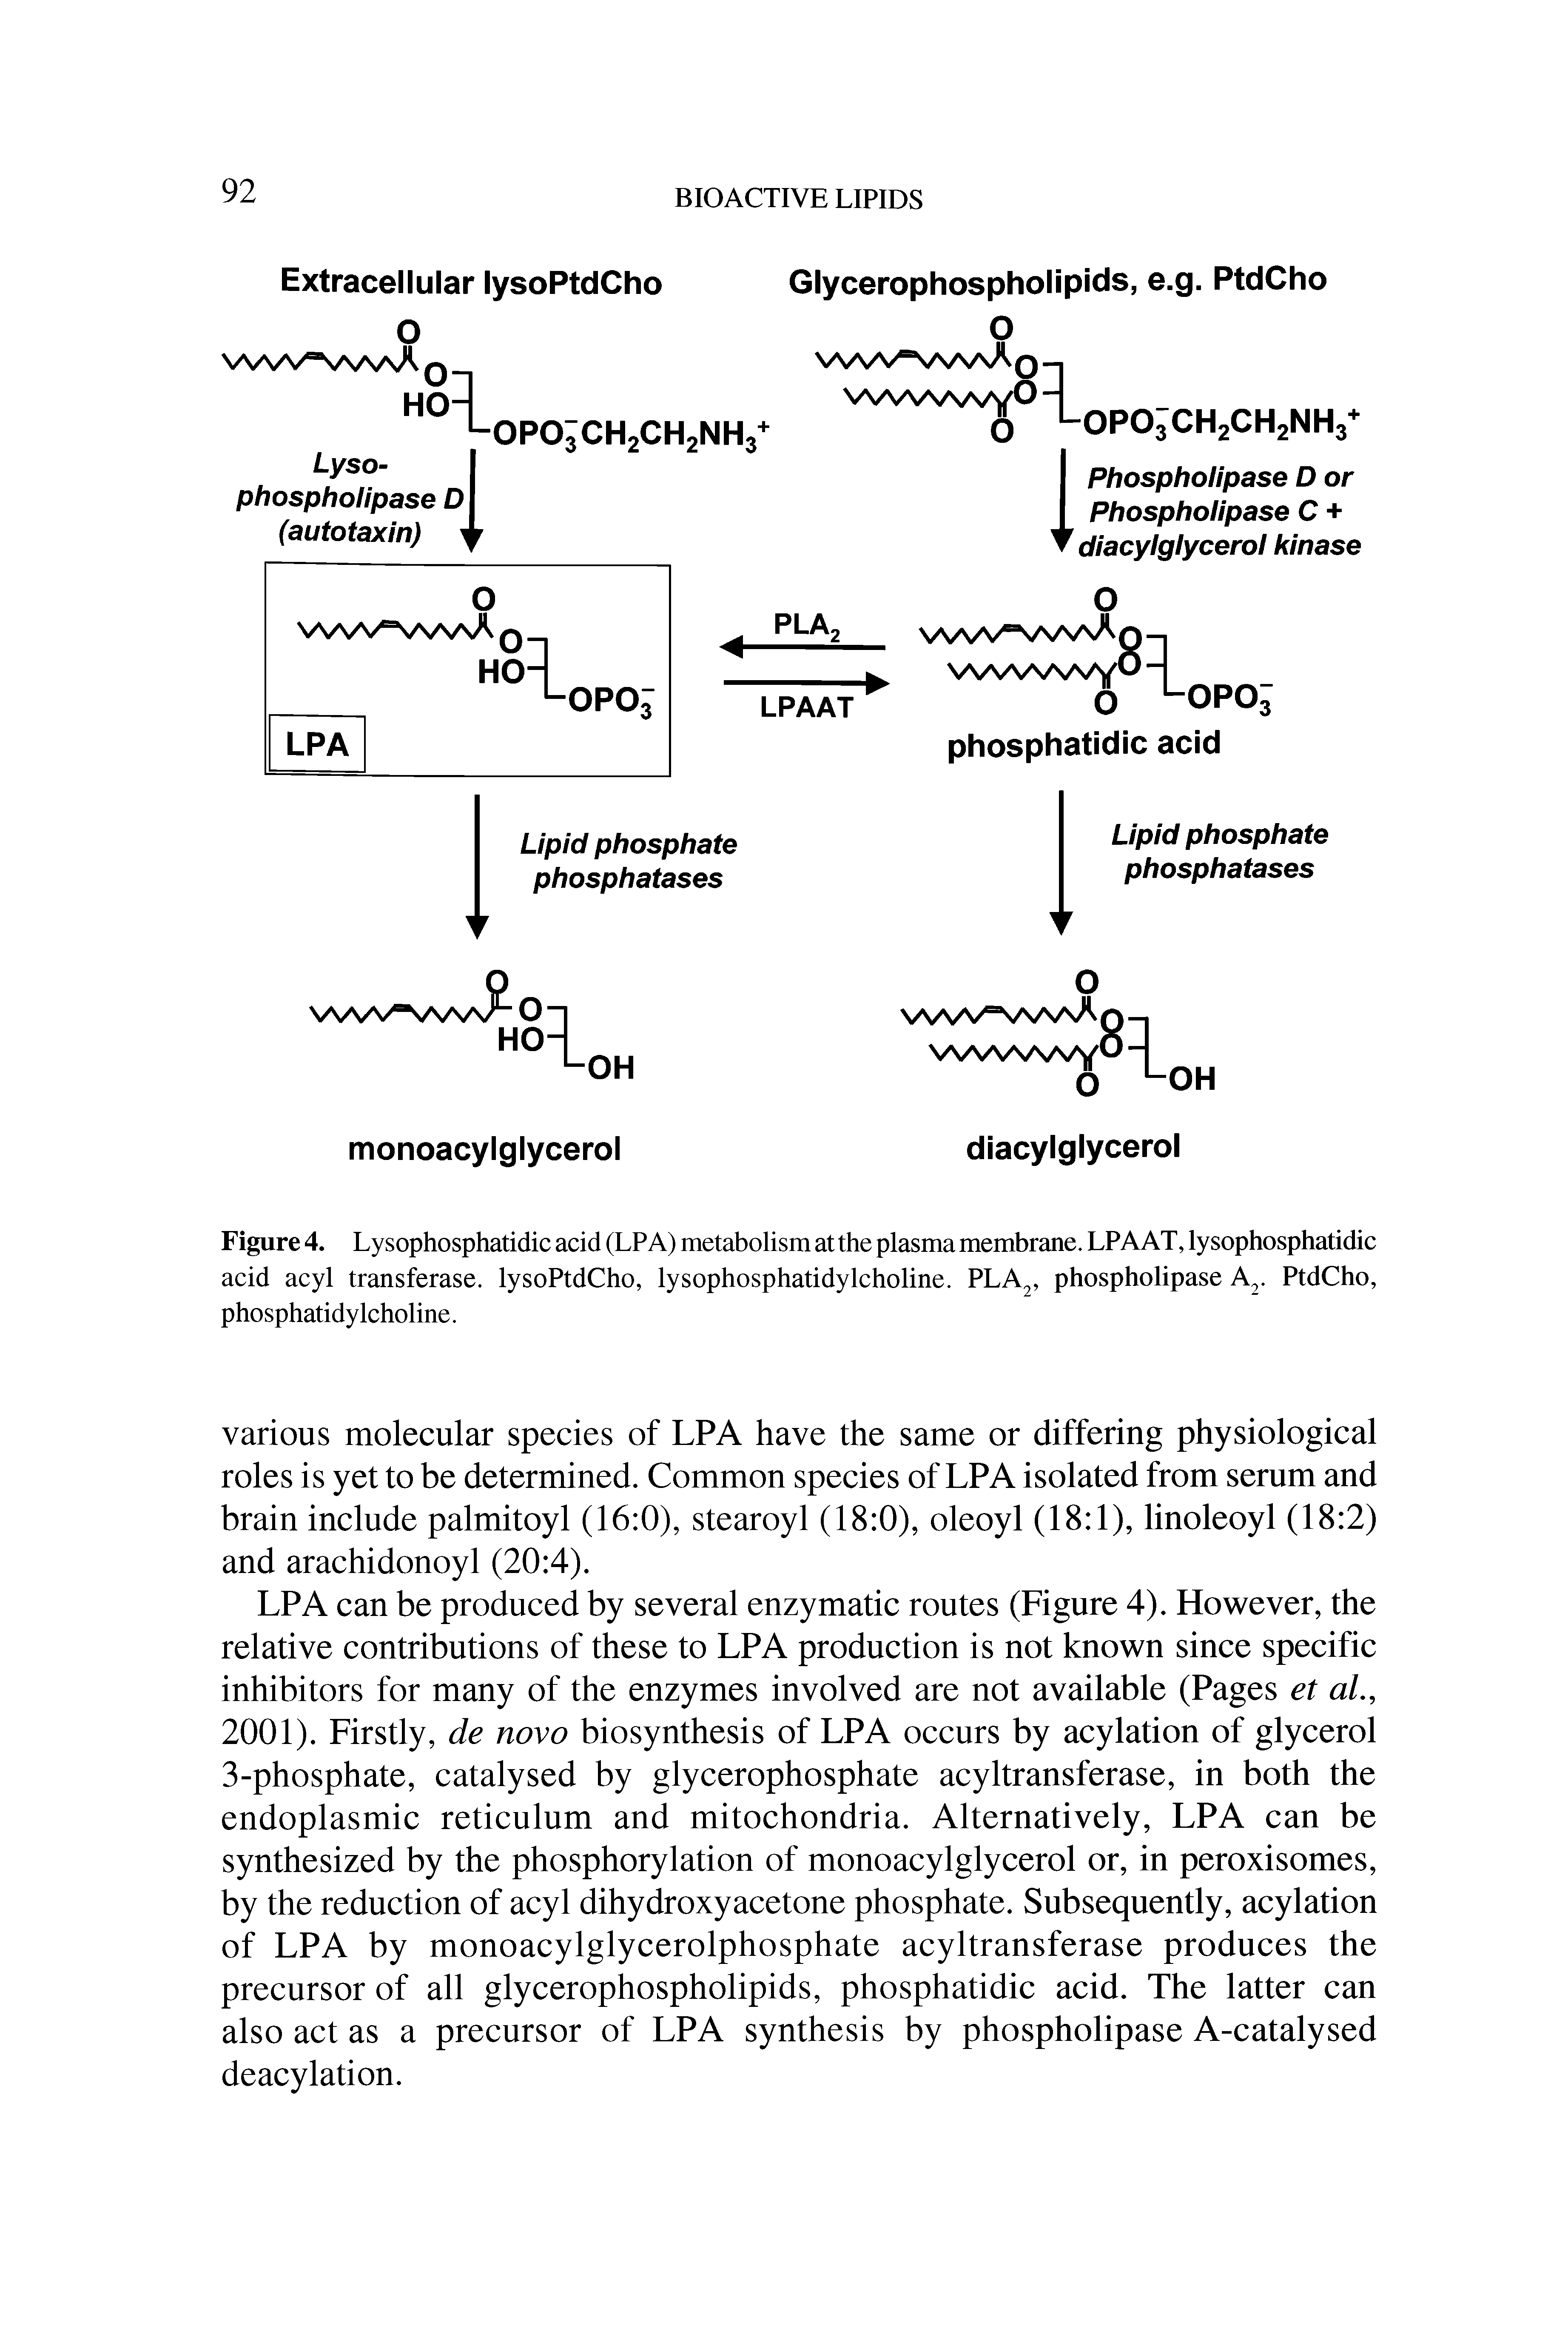 Figure 4. Lysophosphatidic acid (LPA) metabolism at the plasma membrane. LPAAT, lysophosphatidic acid acyl transferase. lysoPtdCho, lysophosphatidylcholine. PLA2, phospholipase A. PtdCho, phosphatidylcholine.